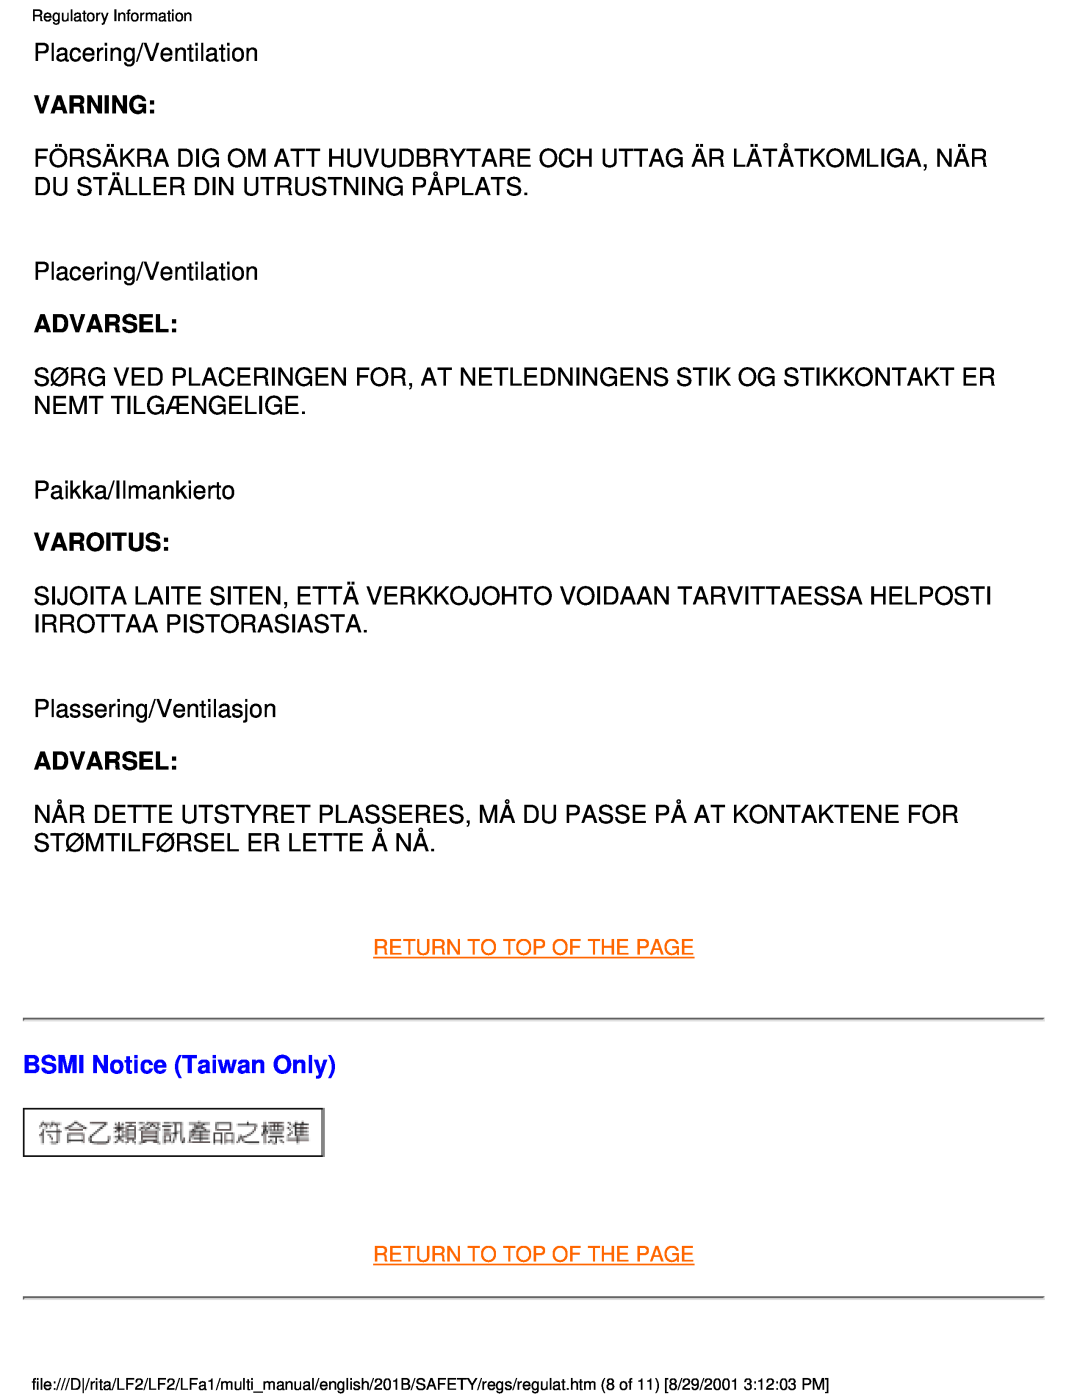 Philips 201B user manual Varning, Advarsel, Varoitus, BSMI Notice Taiwan Only 